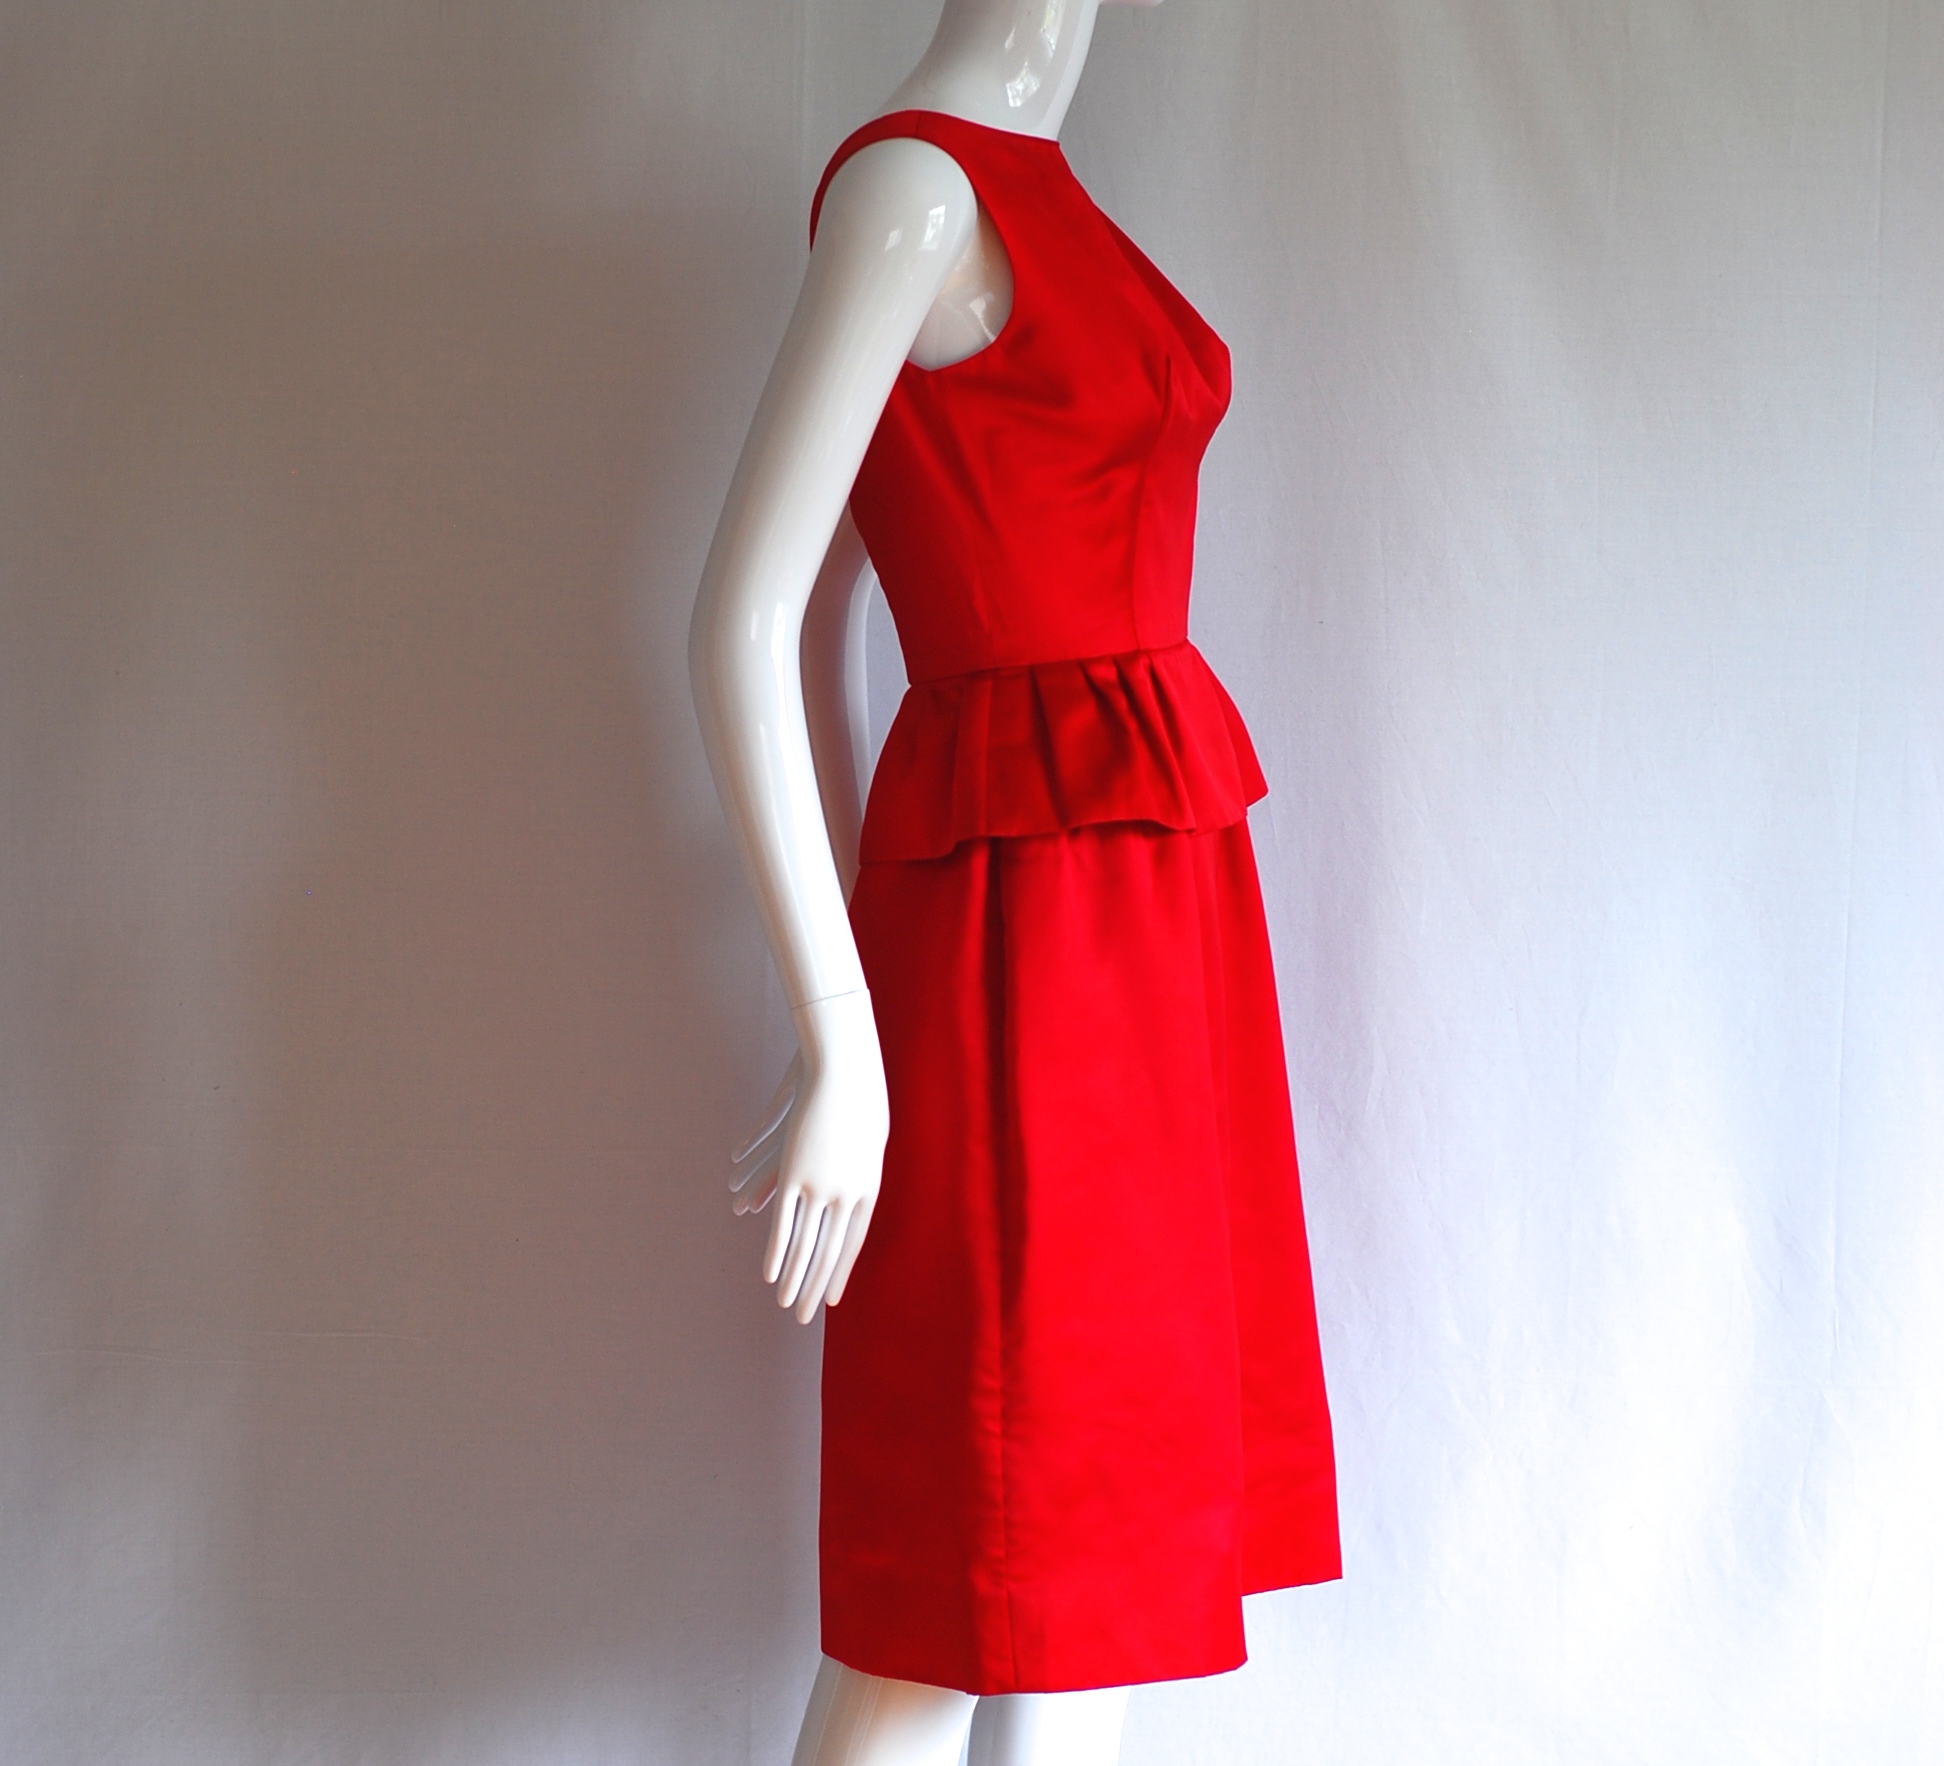 red satin dress canada